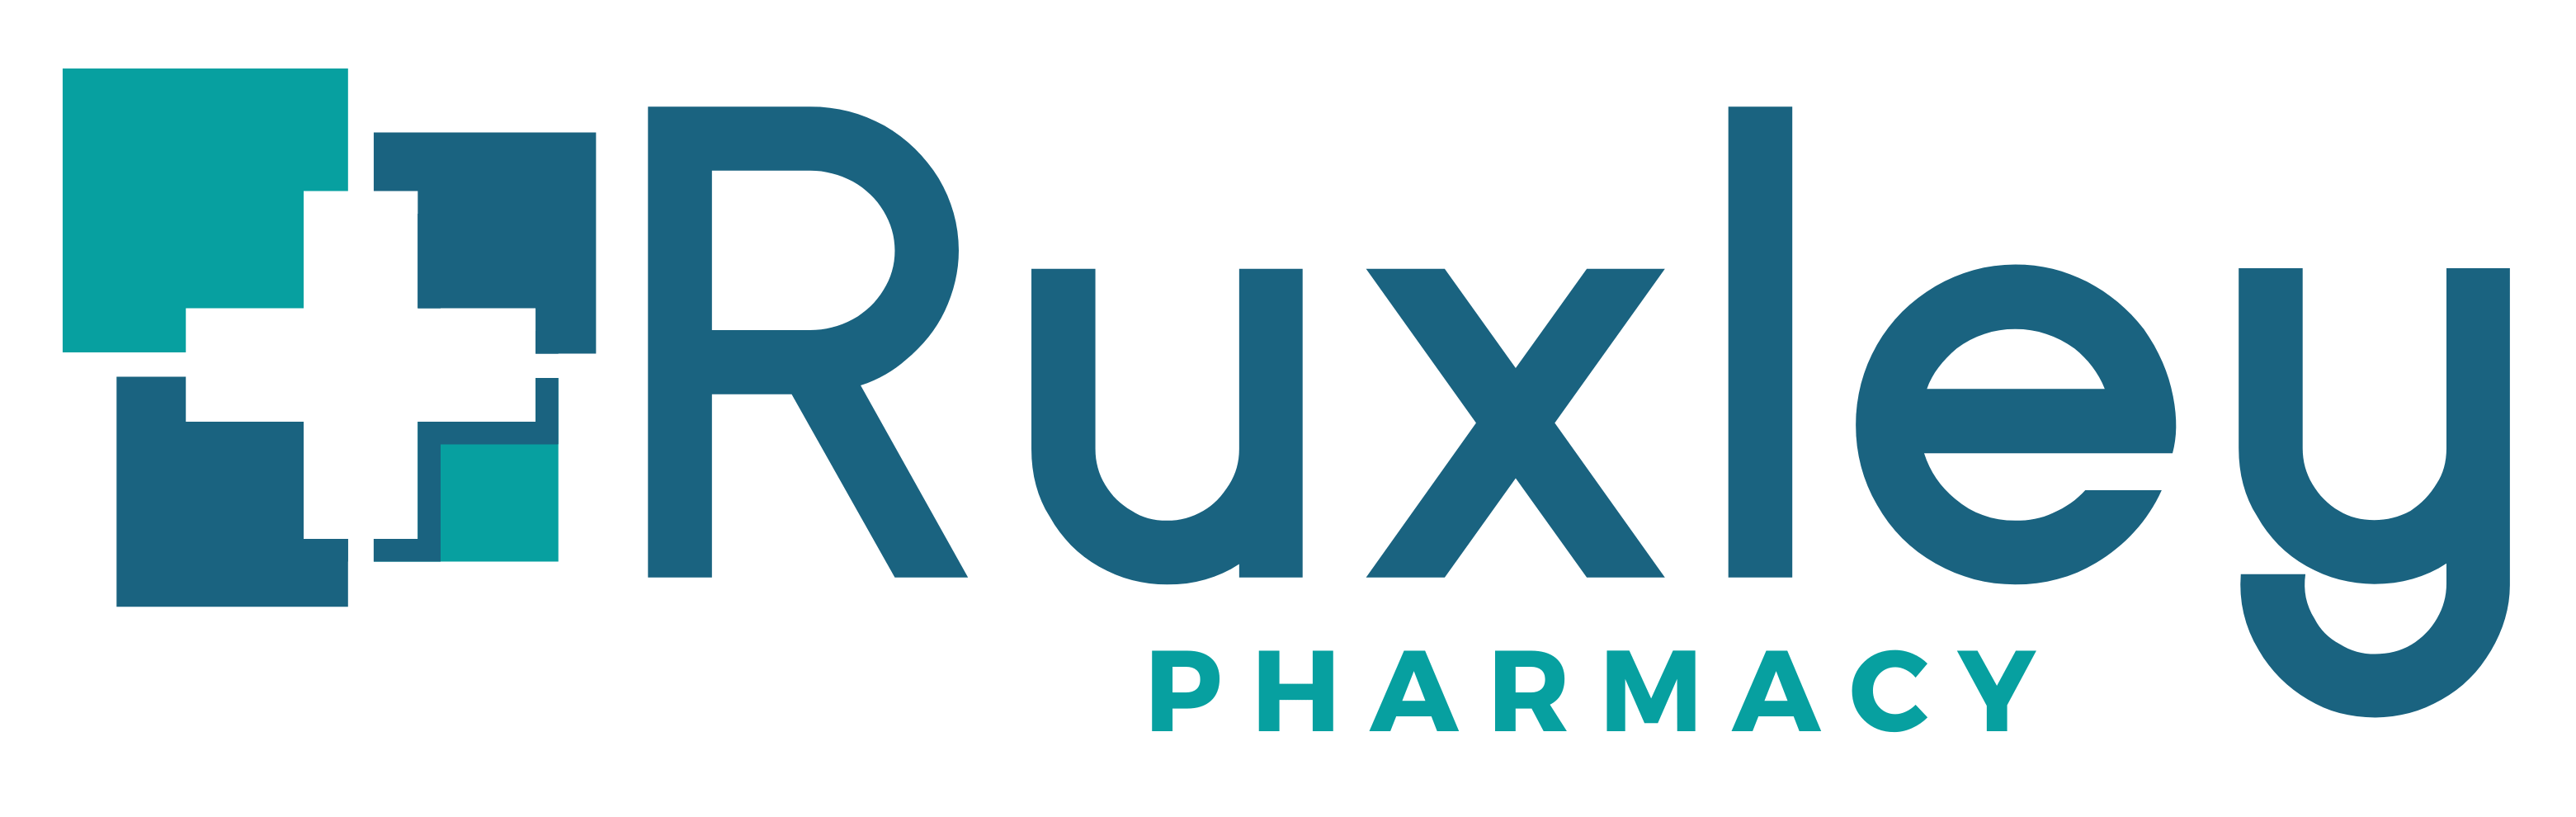 Ruxley Pharmacy